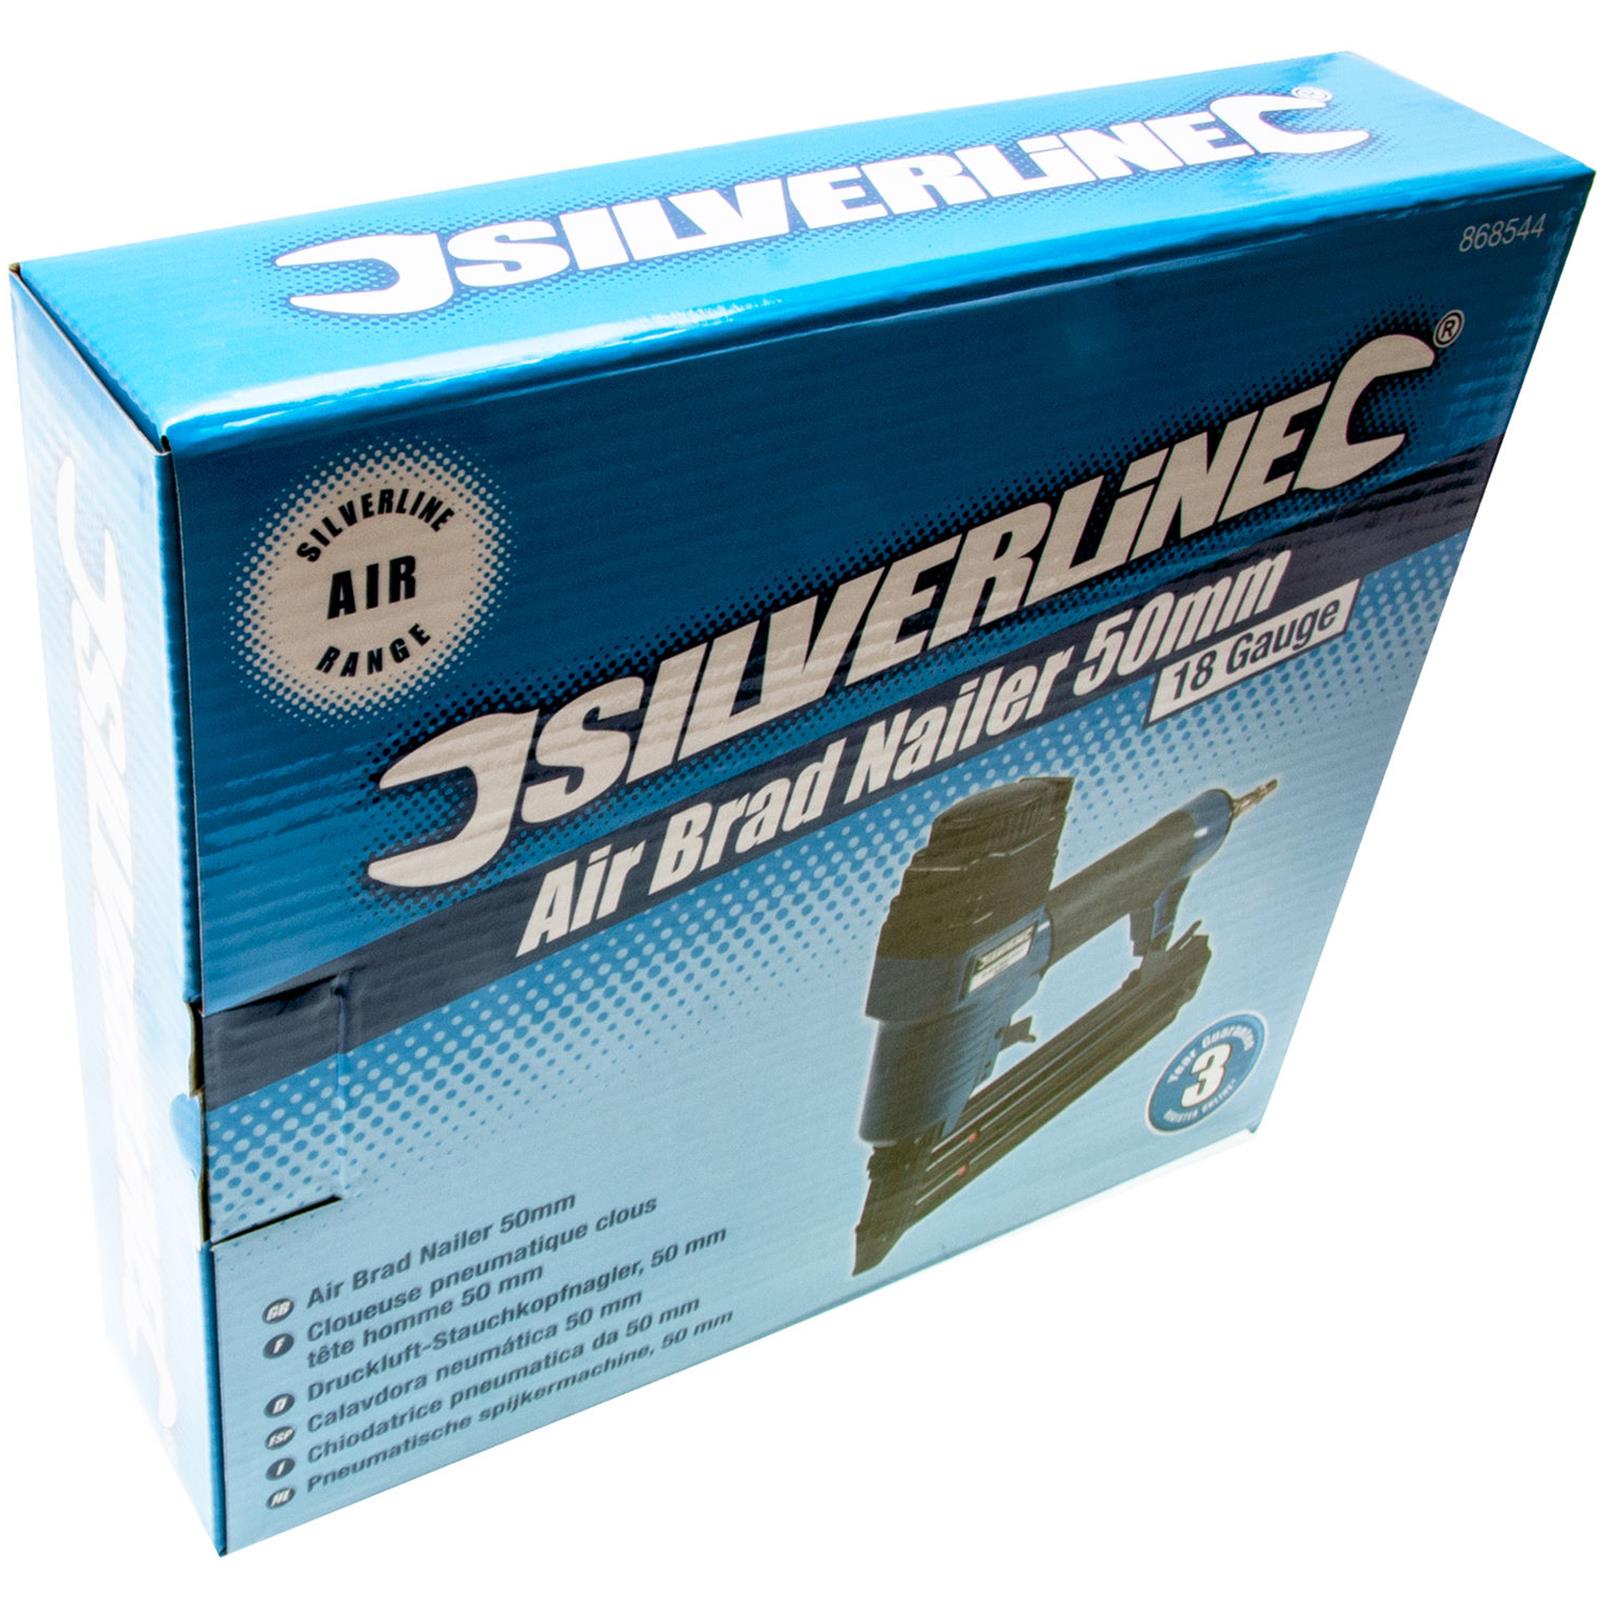 Silverline 50mm Air Brad Nailer 18 Gauge Flooring Woodwork Nail Gun Tool 1/4